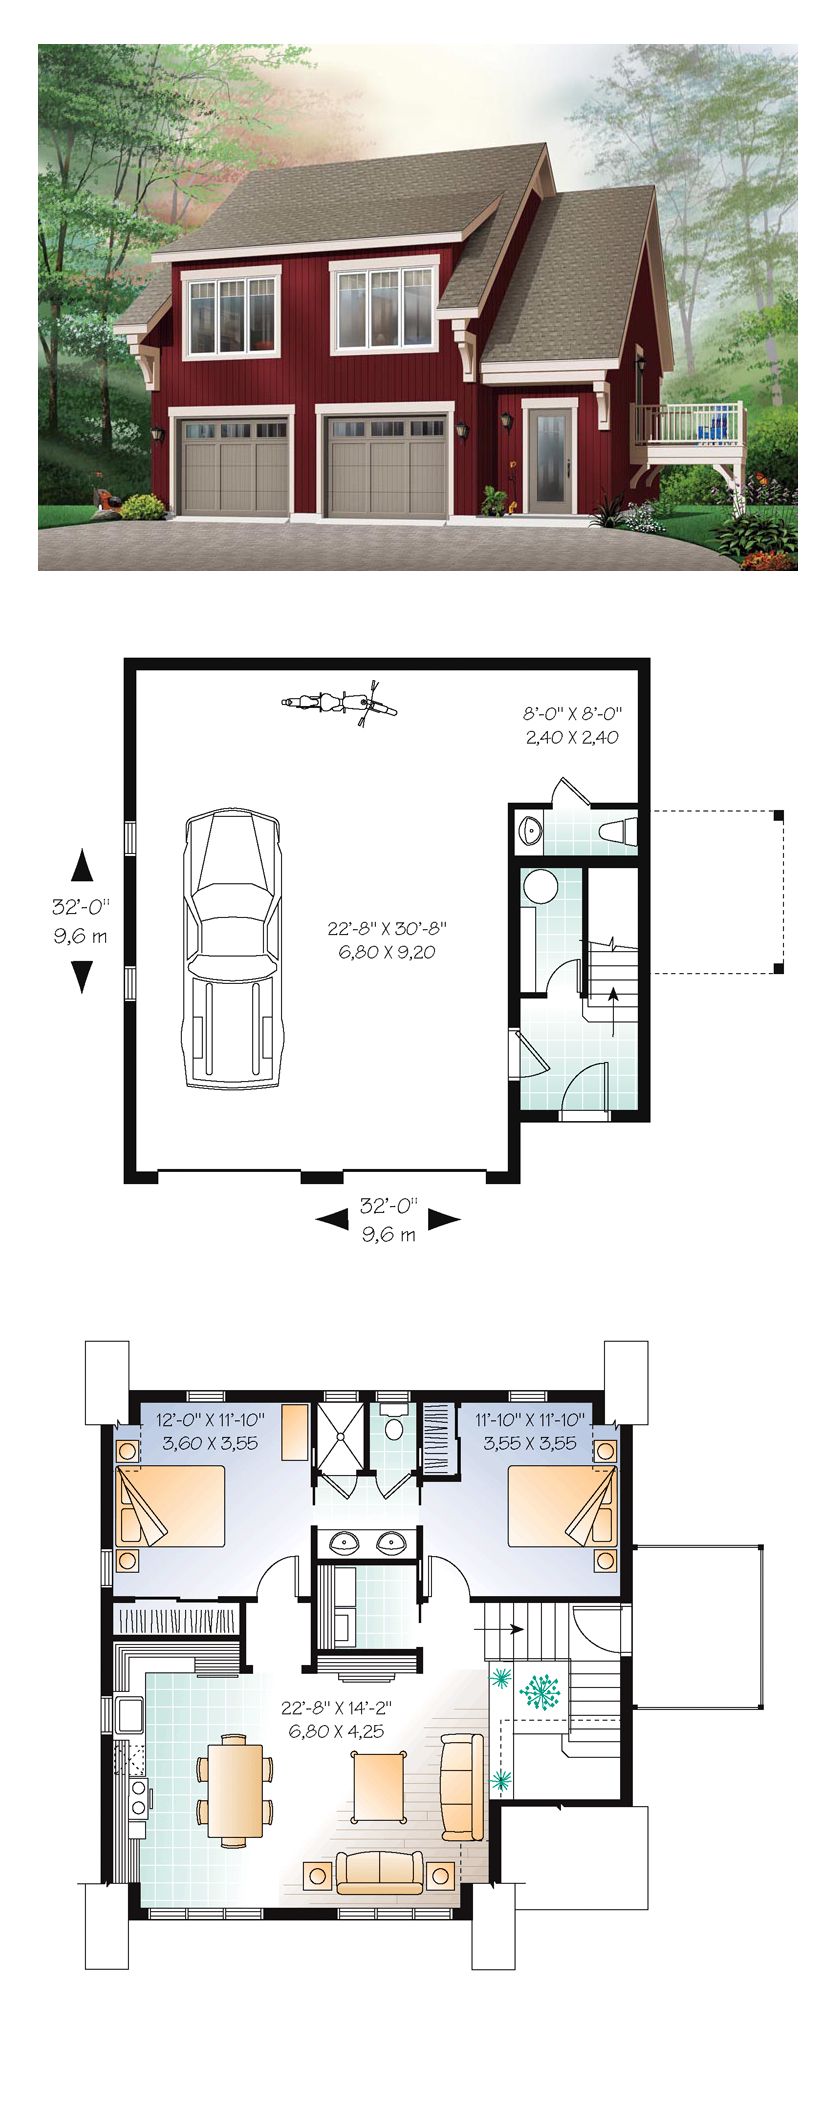 Garage Apartment Plan 64817 Total Living Area 1068 sq